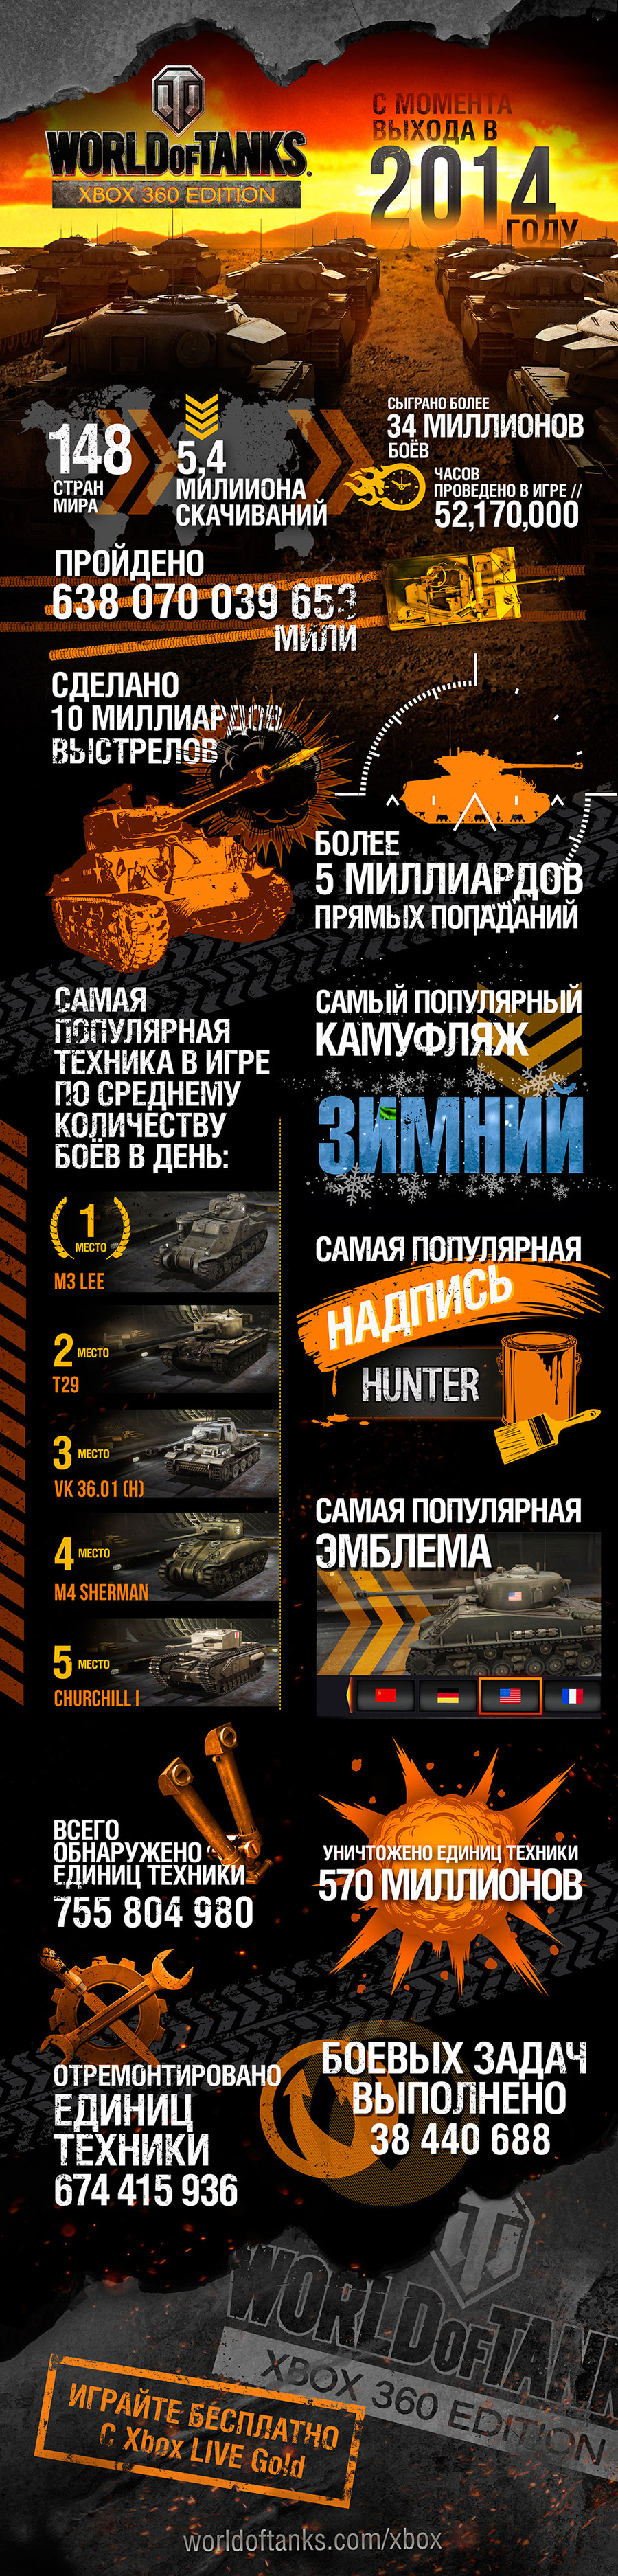 World-of-tanks-1423985912808341